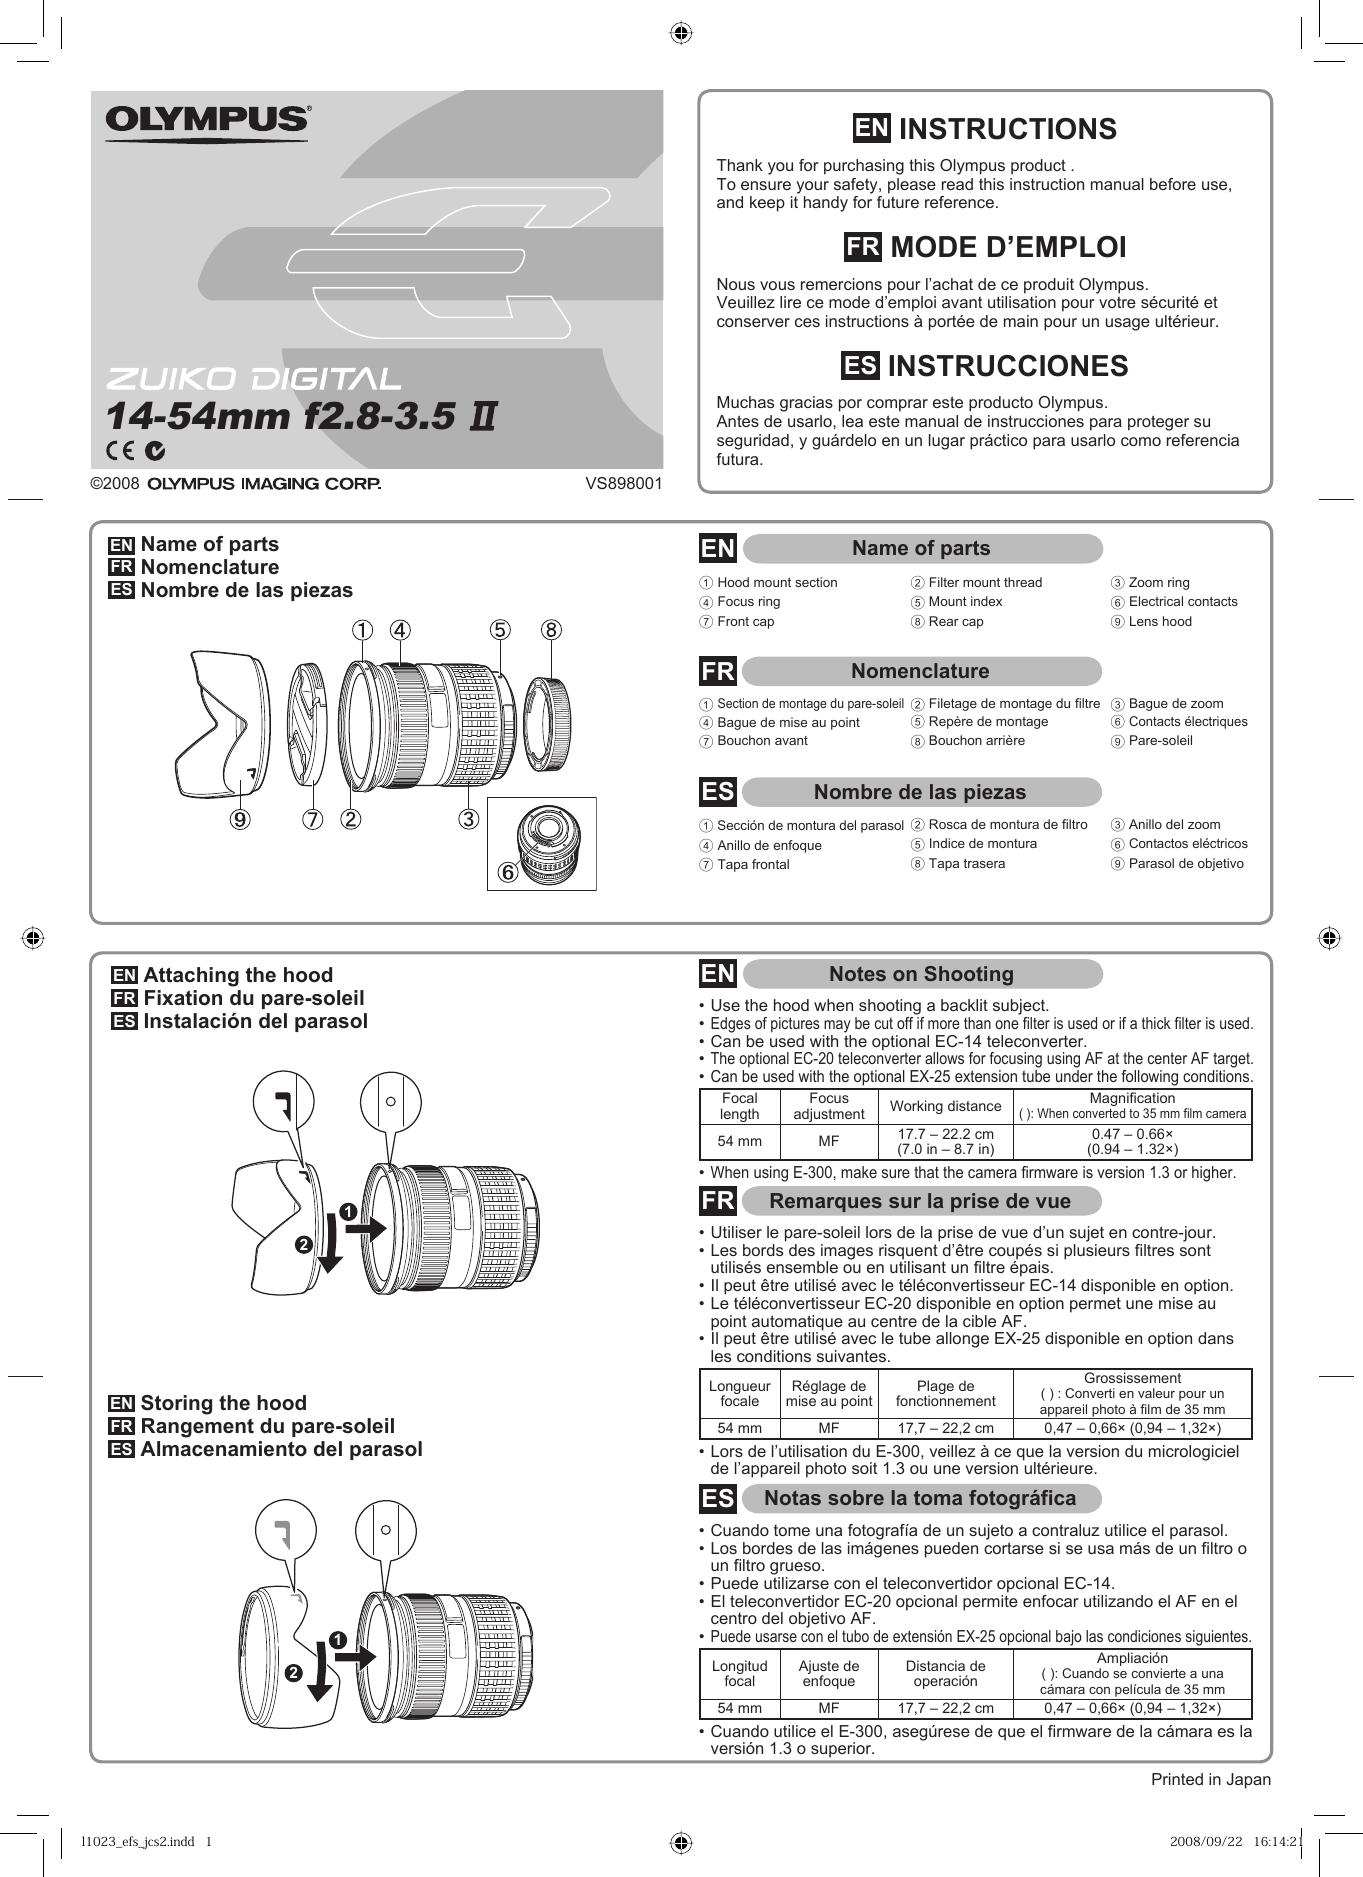 Olympus Users Manual Zuiko Digital 14 54mm F2 8 3 5 Instruction